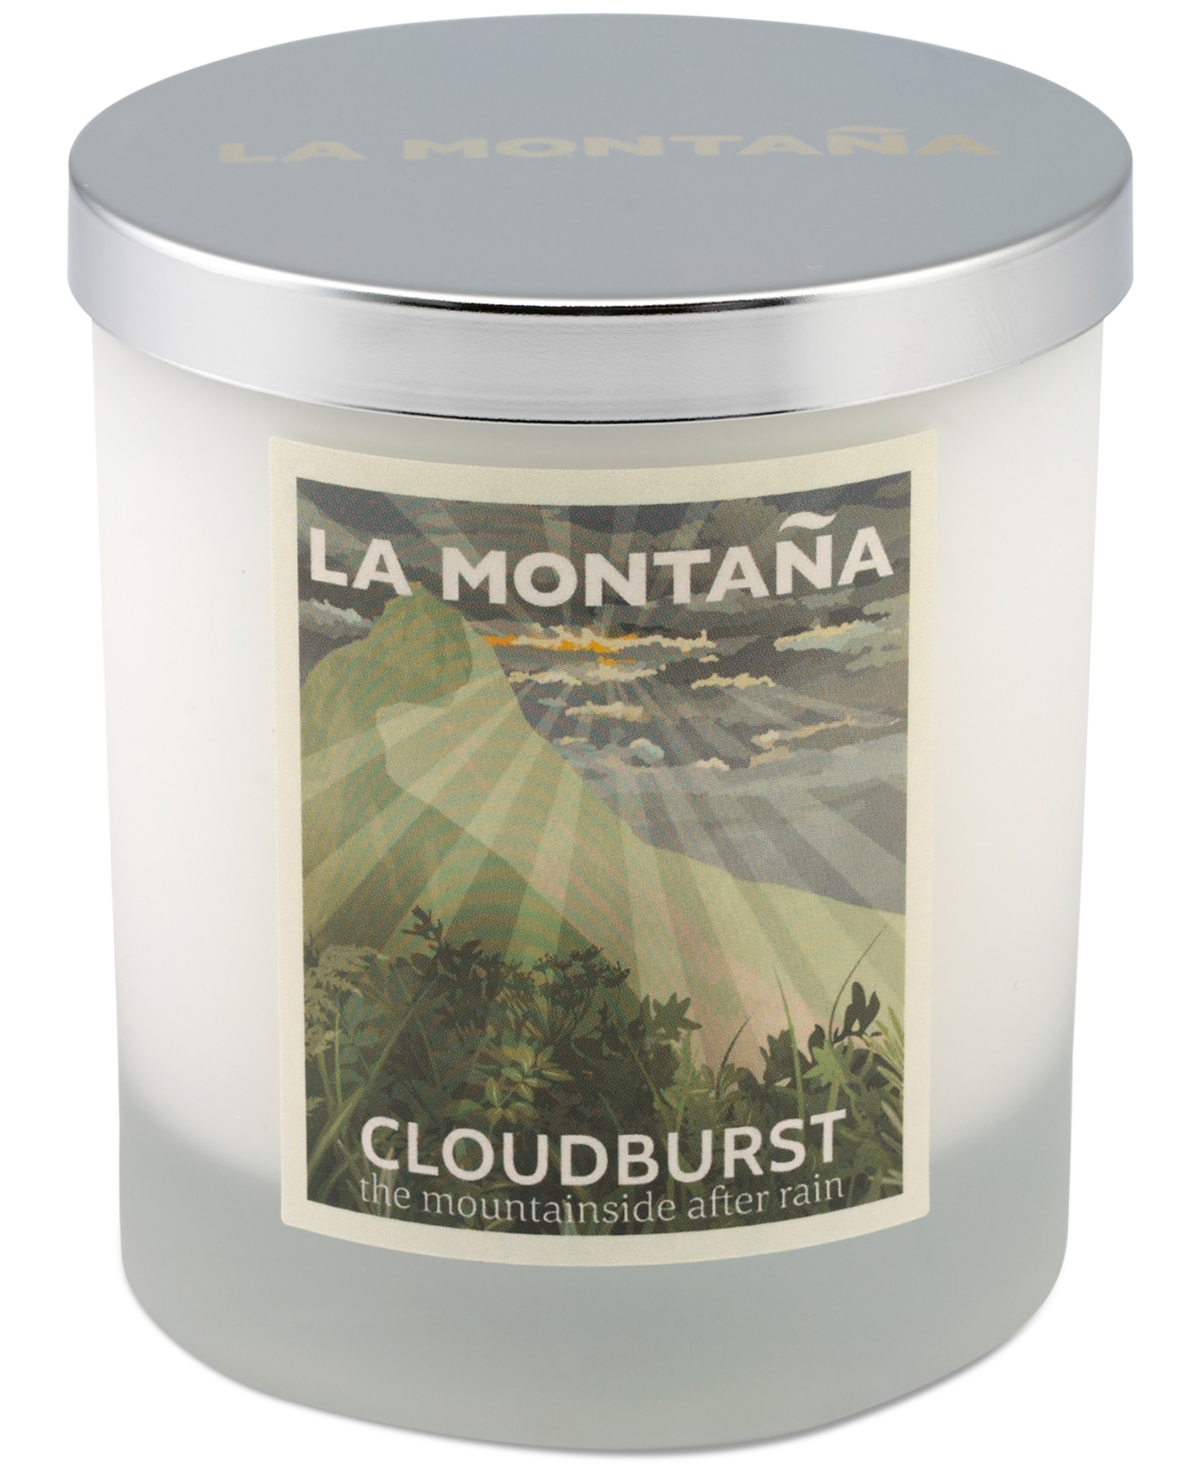 La Montana Cloudburst Scented Candle, 8 oz.